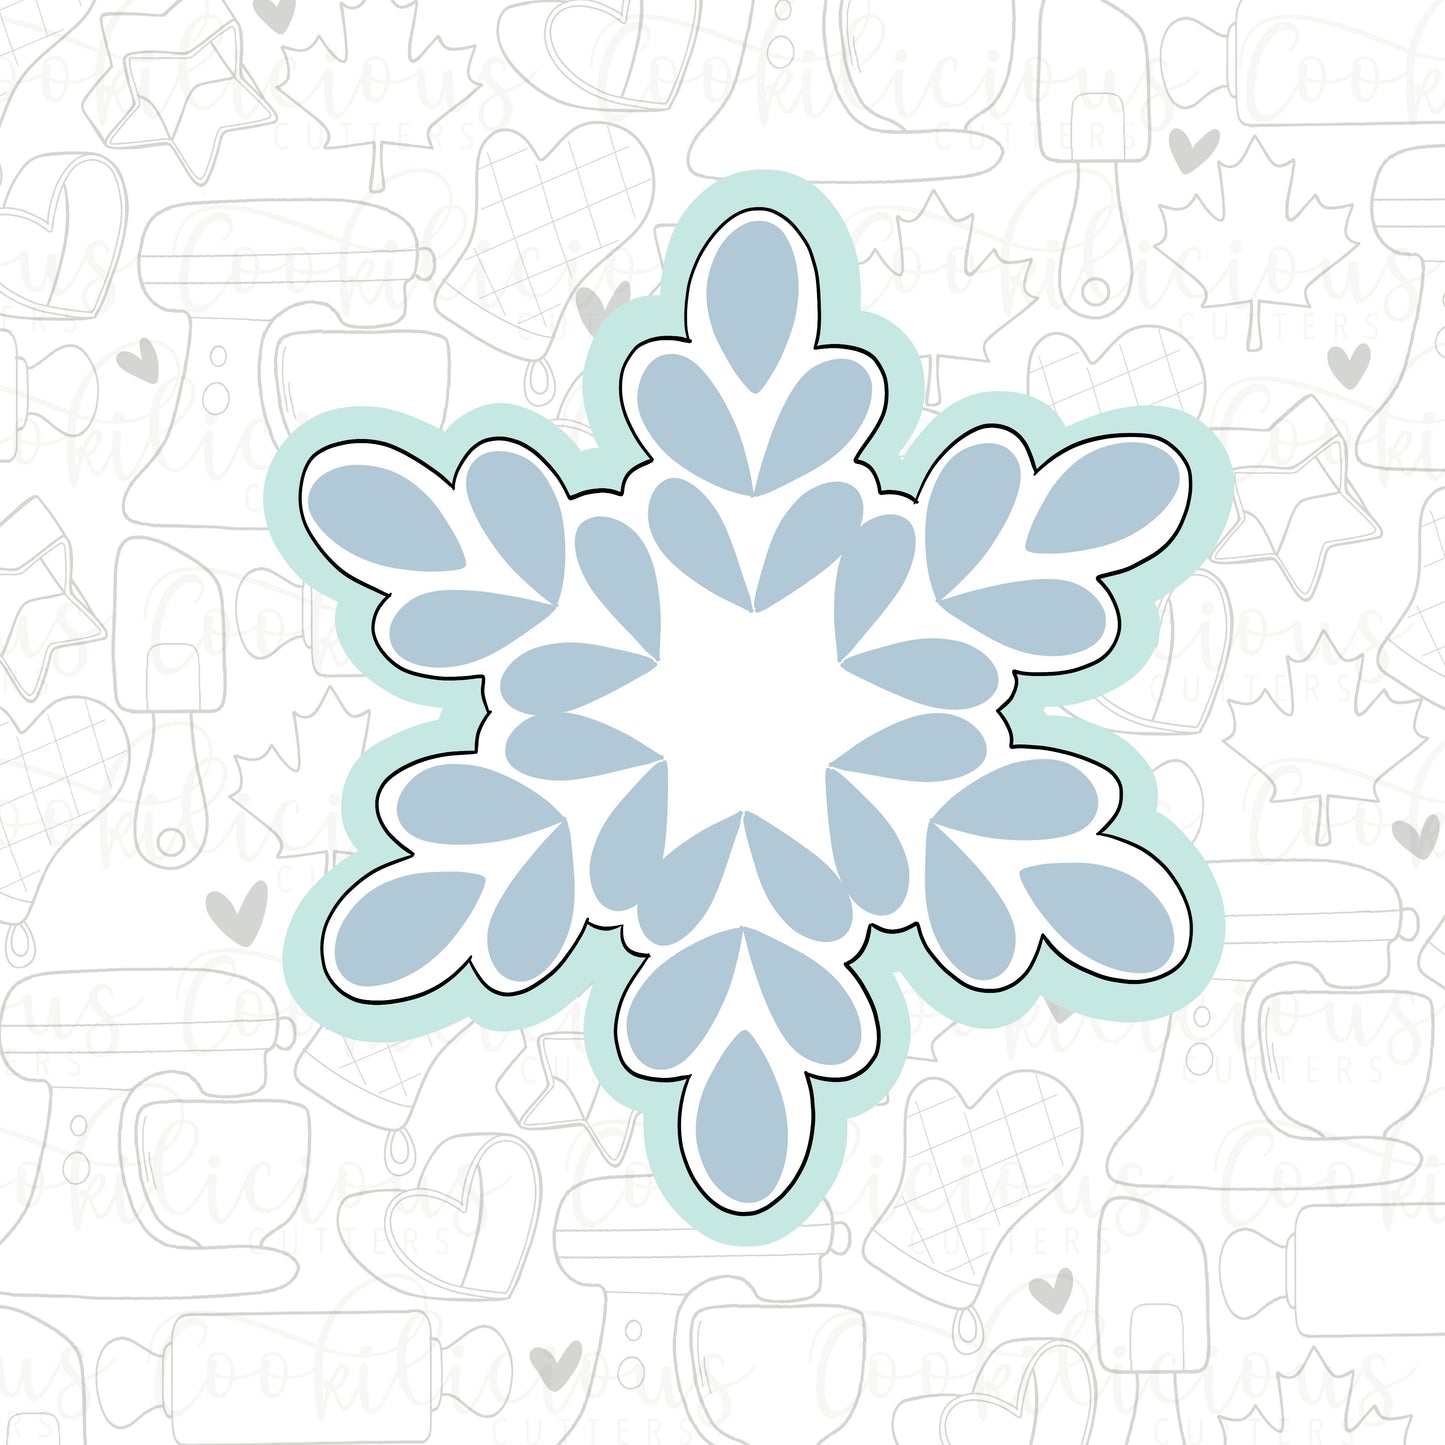 Snowflake01